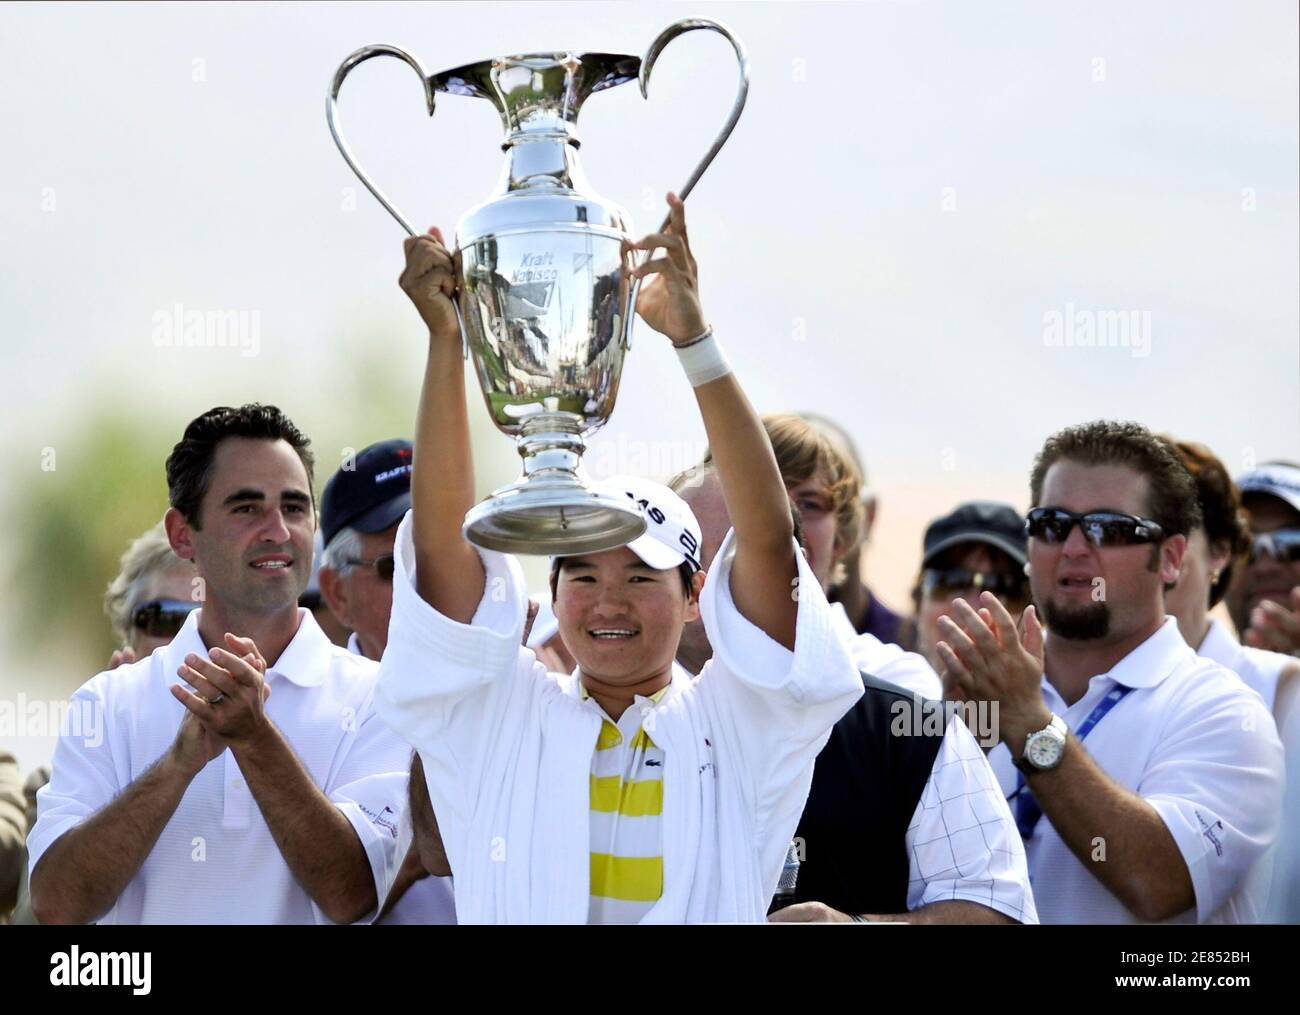 Yani Tseng of Taiwan celebrates winning the LPGA's Kraft Nabisco Championship golf tournament in Rancho Mirage, California, April 4, 2010.  REUTERS/Gus Ruelas (UNITED STATES - Tags: SPORT GOLF) Stock Photo